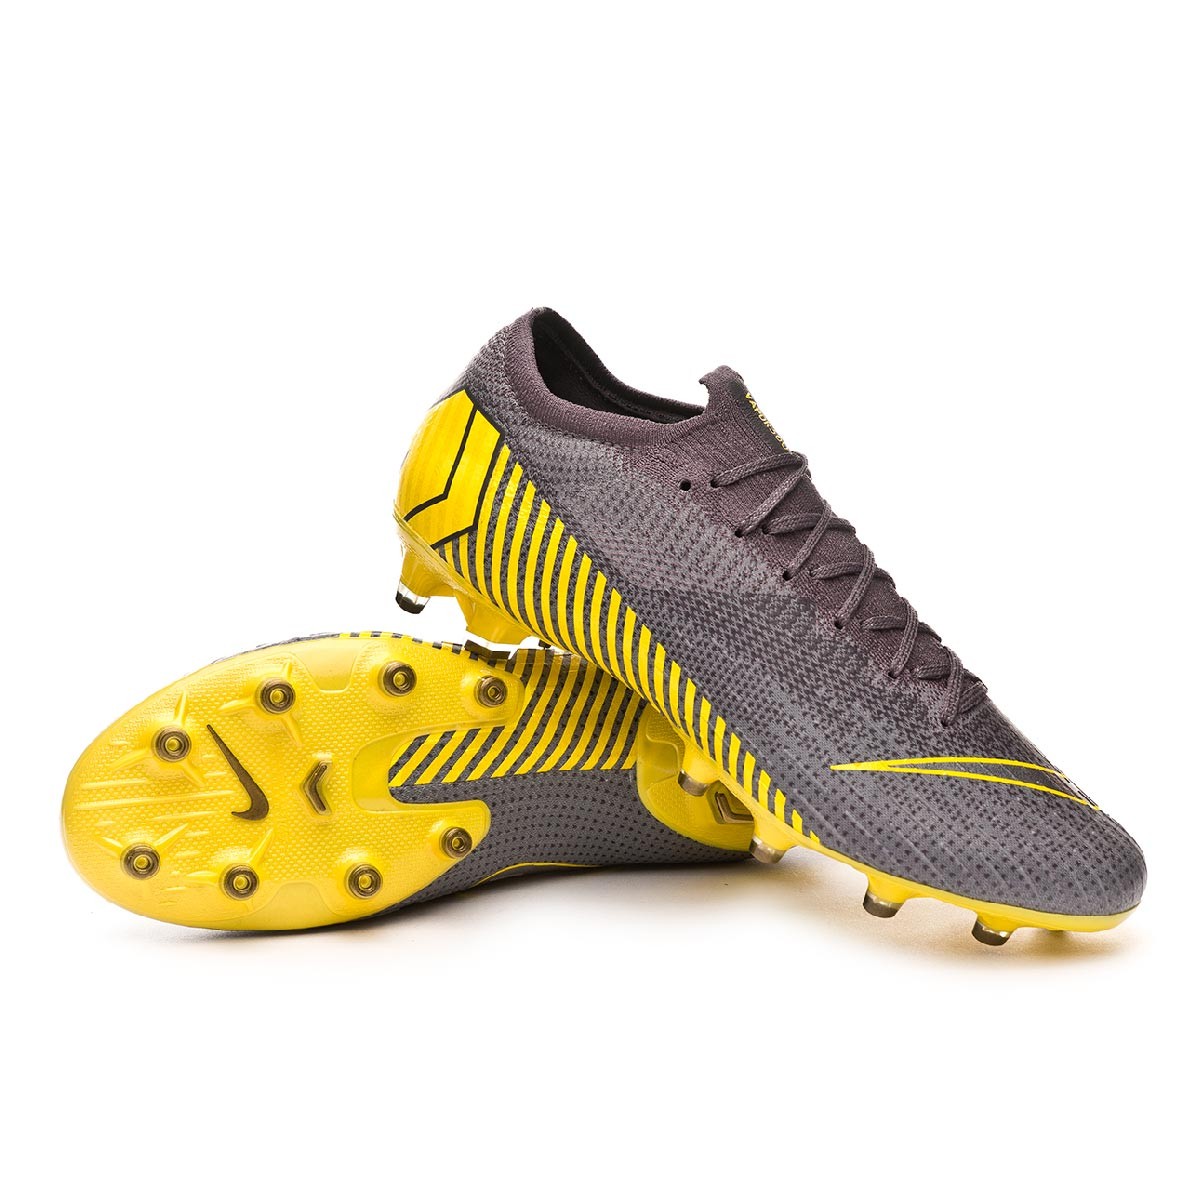 Football Boots Nike Mercurial Vapor XII Elite AG-Pro Thunder  grey-Black-Dark grey - Football store Fútbol Emotion